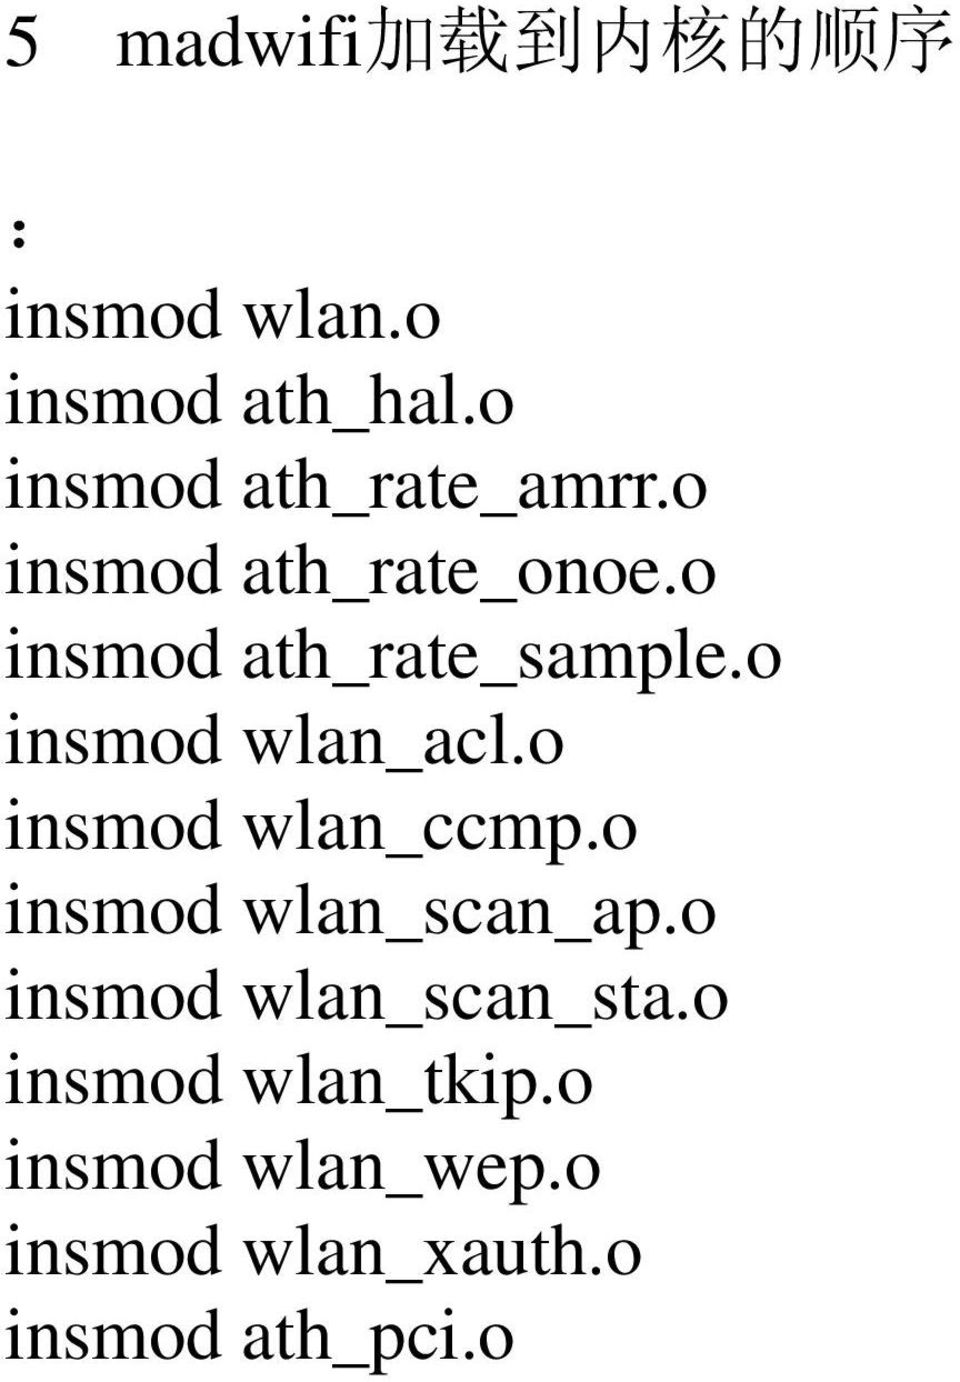 o insmod wlan_acl.o insmod wlan_ccmp.o insmod wlan_scan_ap.